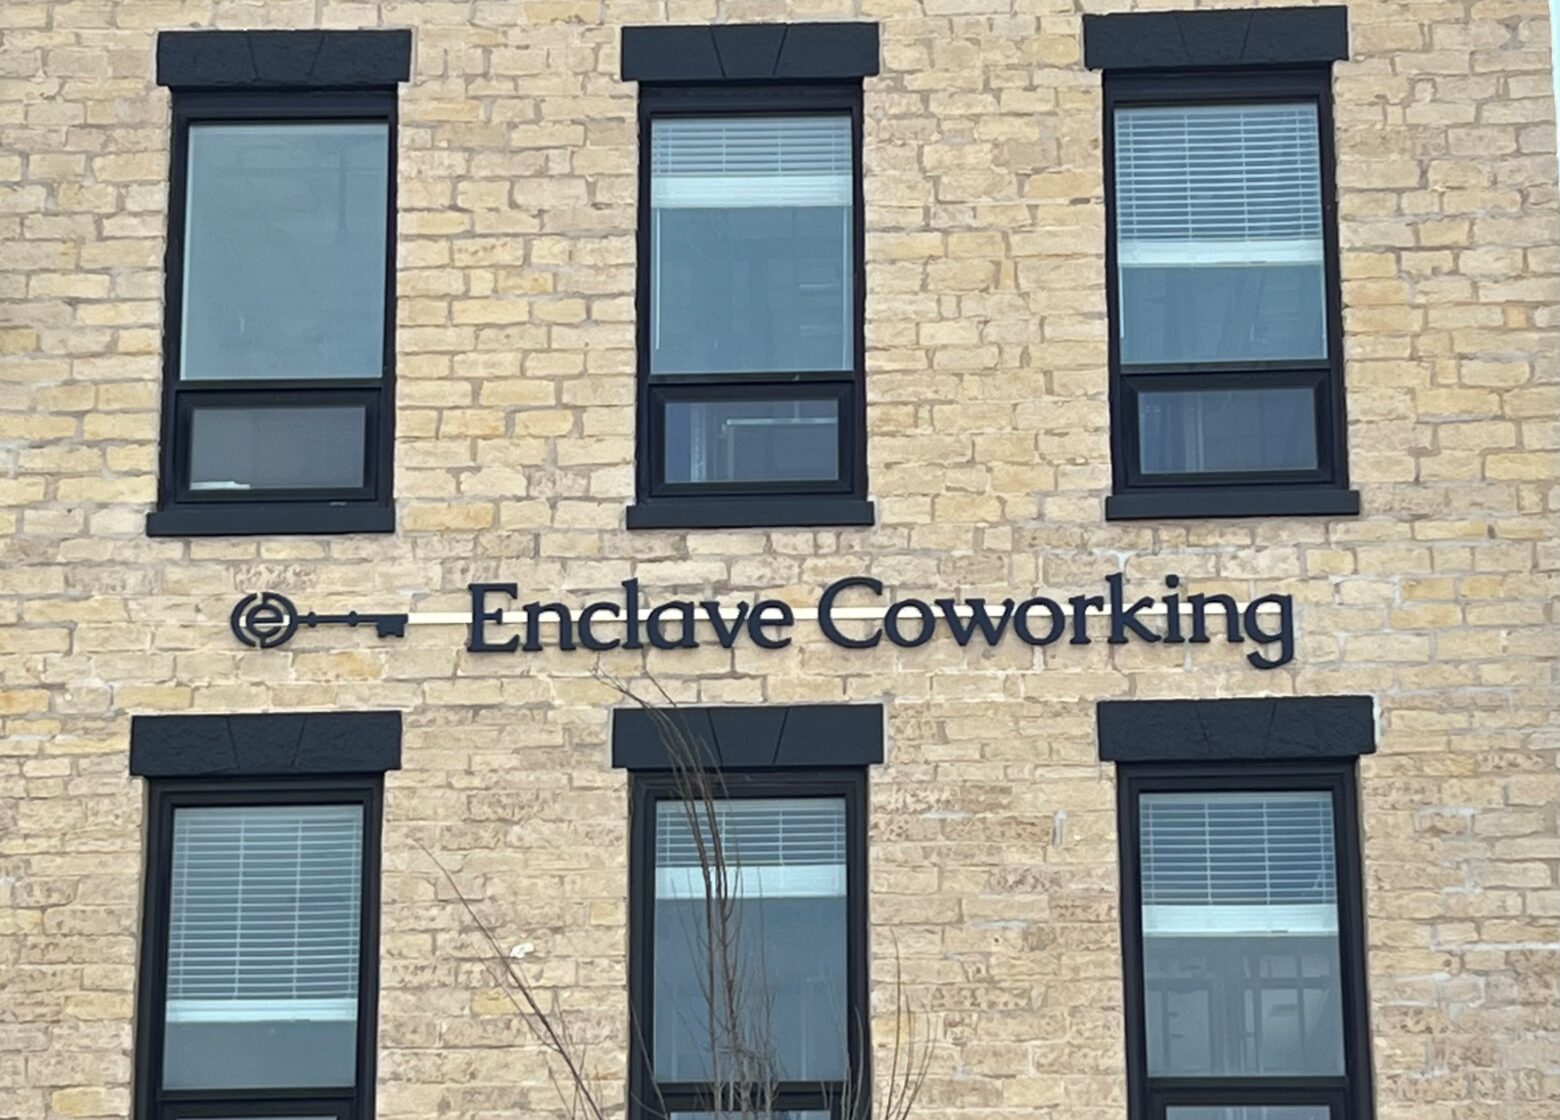 Enclave Coworking